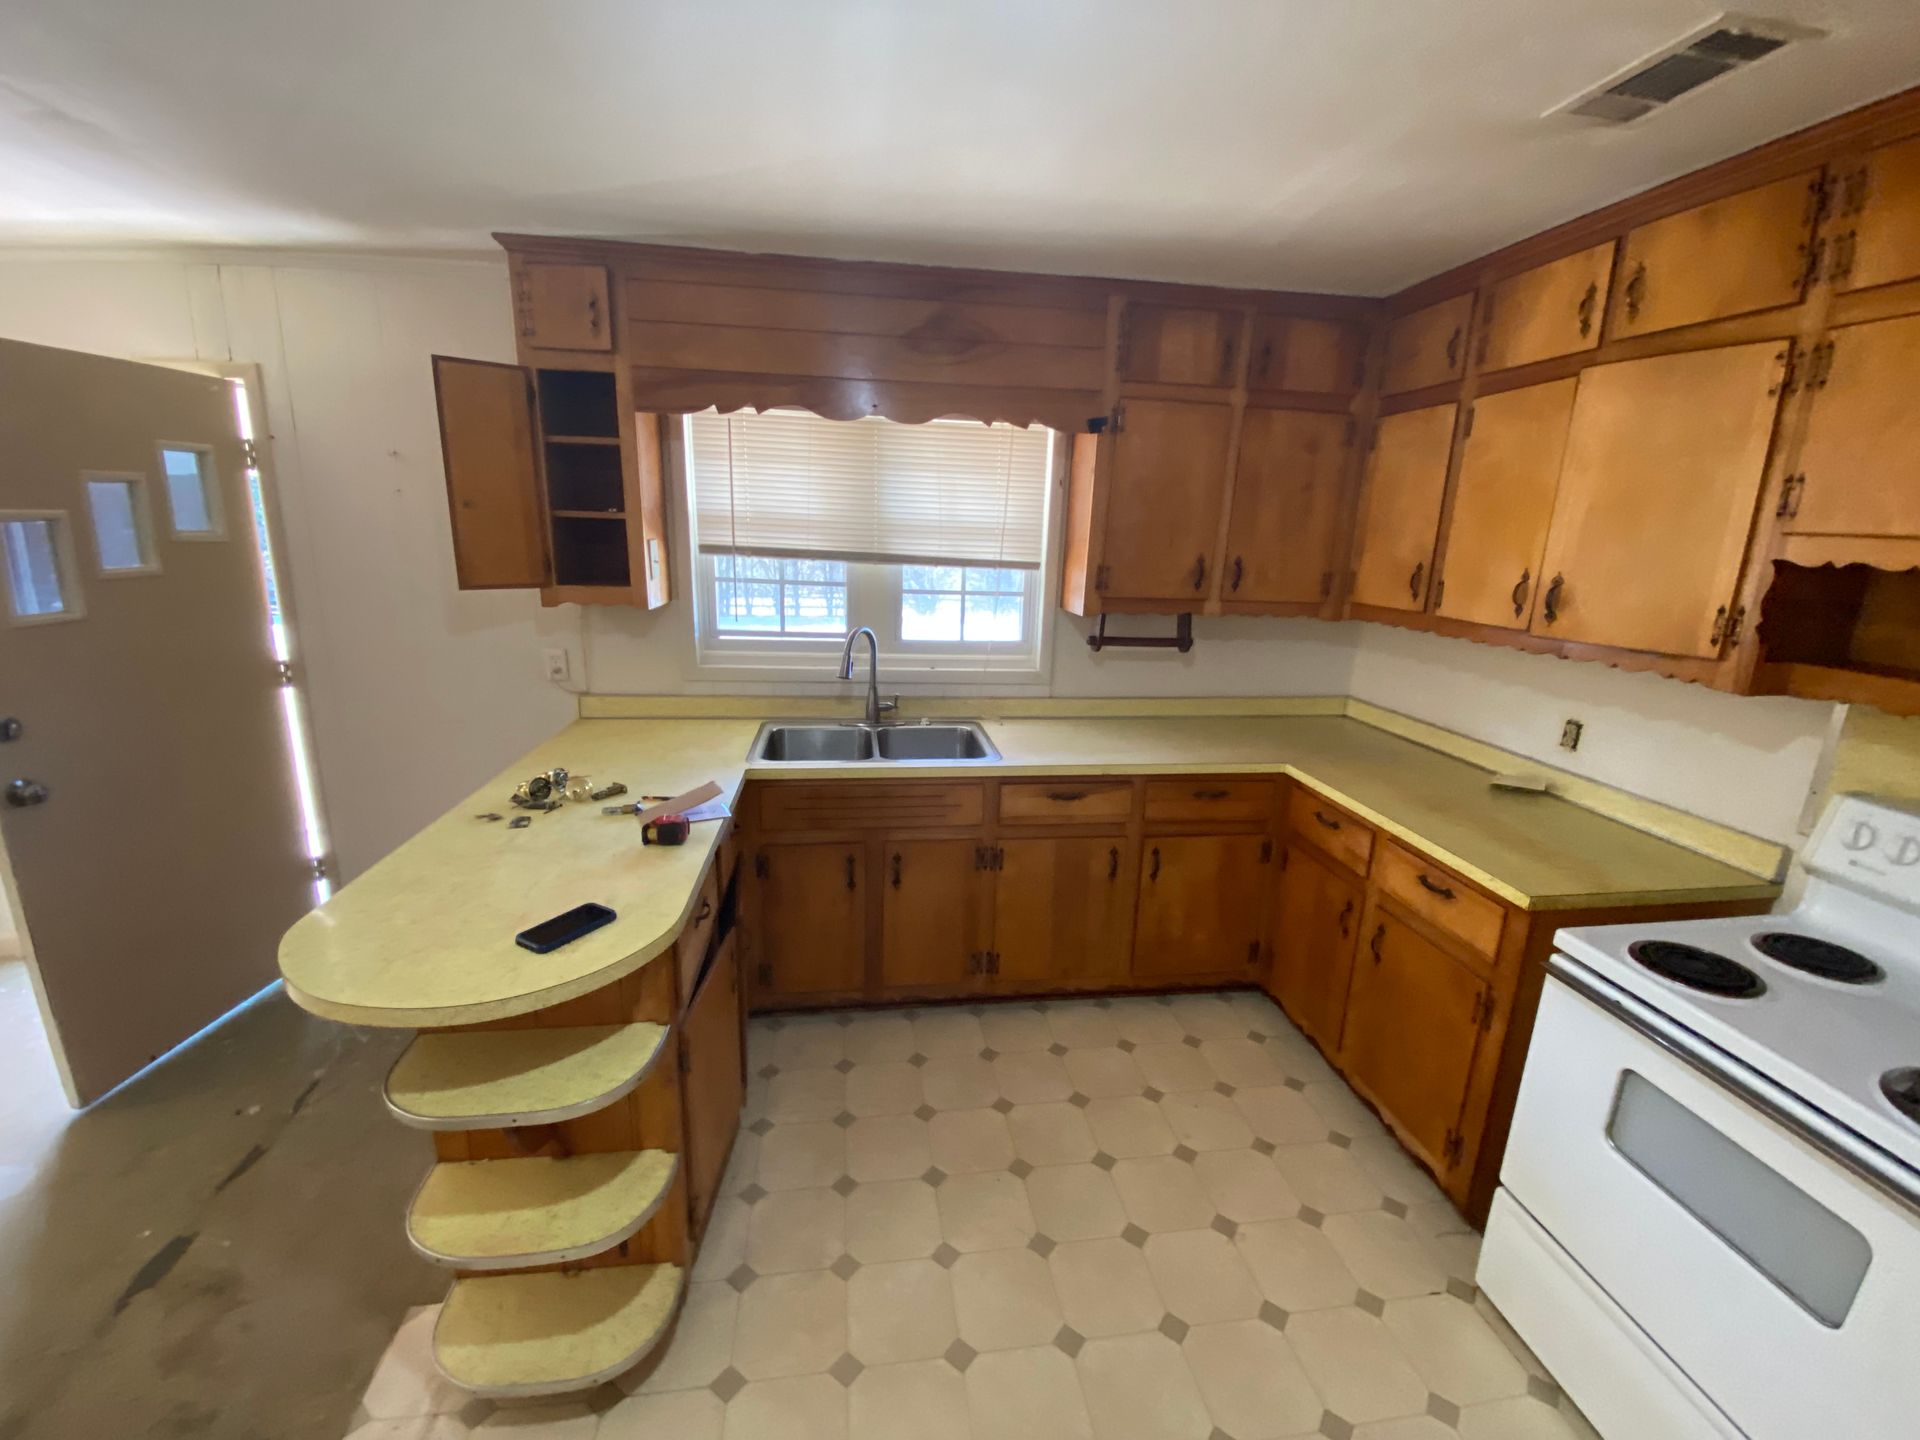 Old Kitchen | Woodstock, GA | Atlanta Home Completion LLC